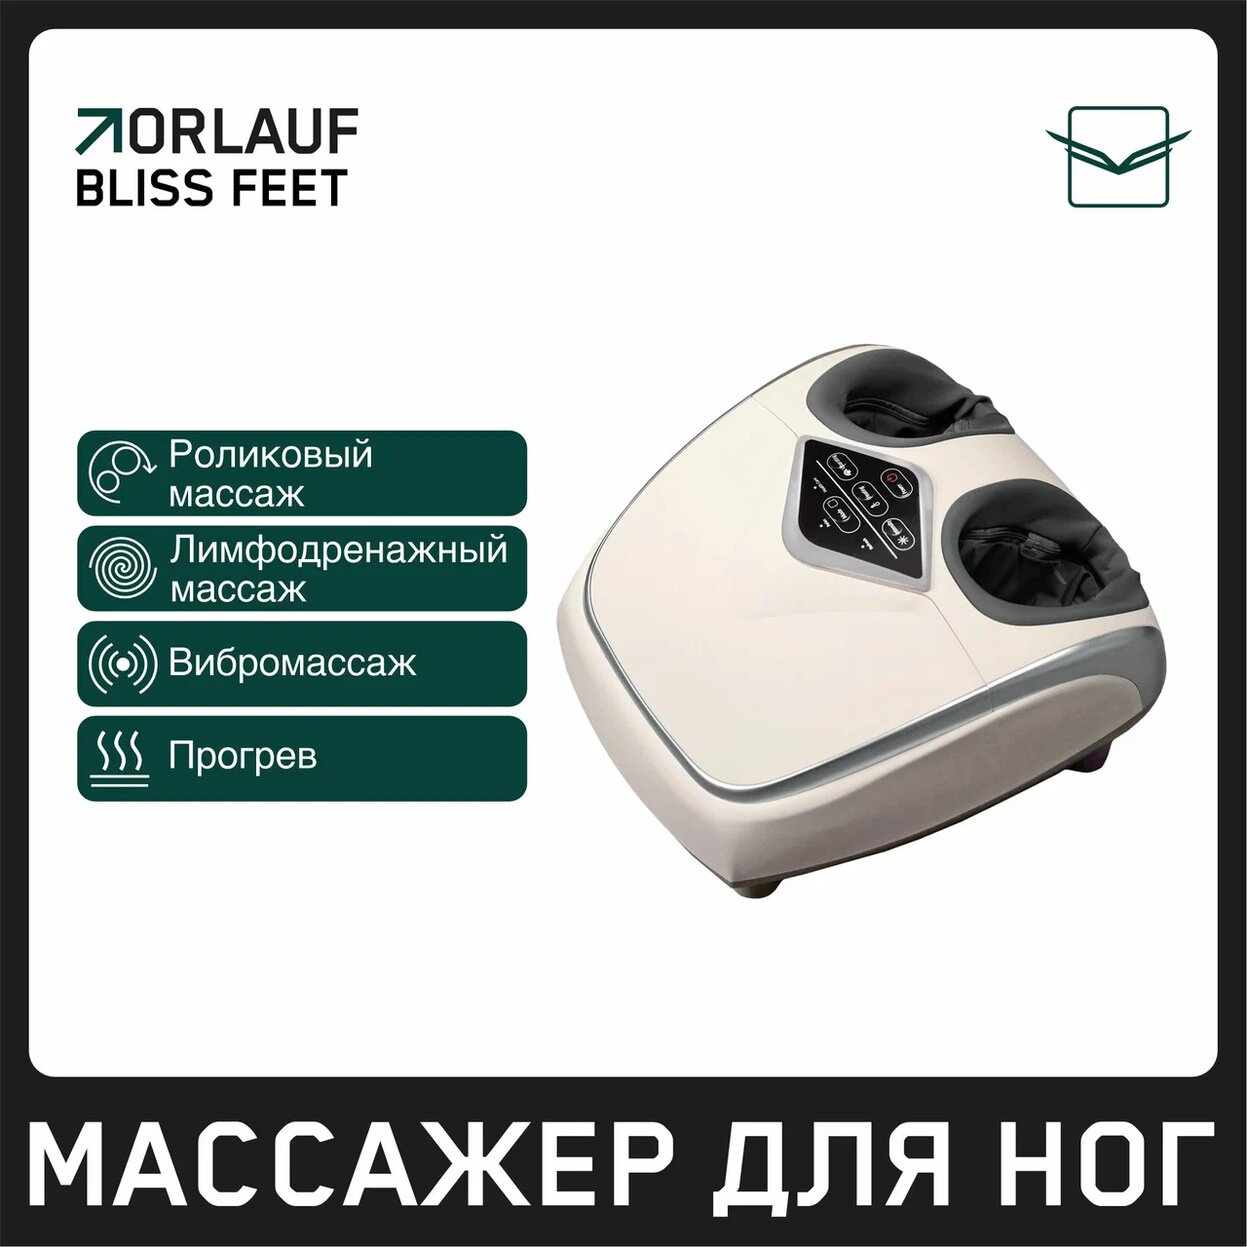 Orlauf Bliss Feet из каталога массажеров в Москве по цене 27600 ₽